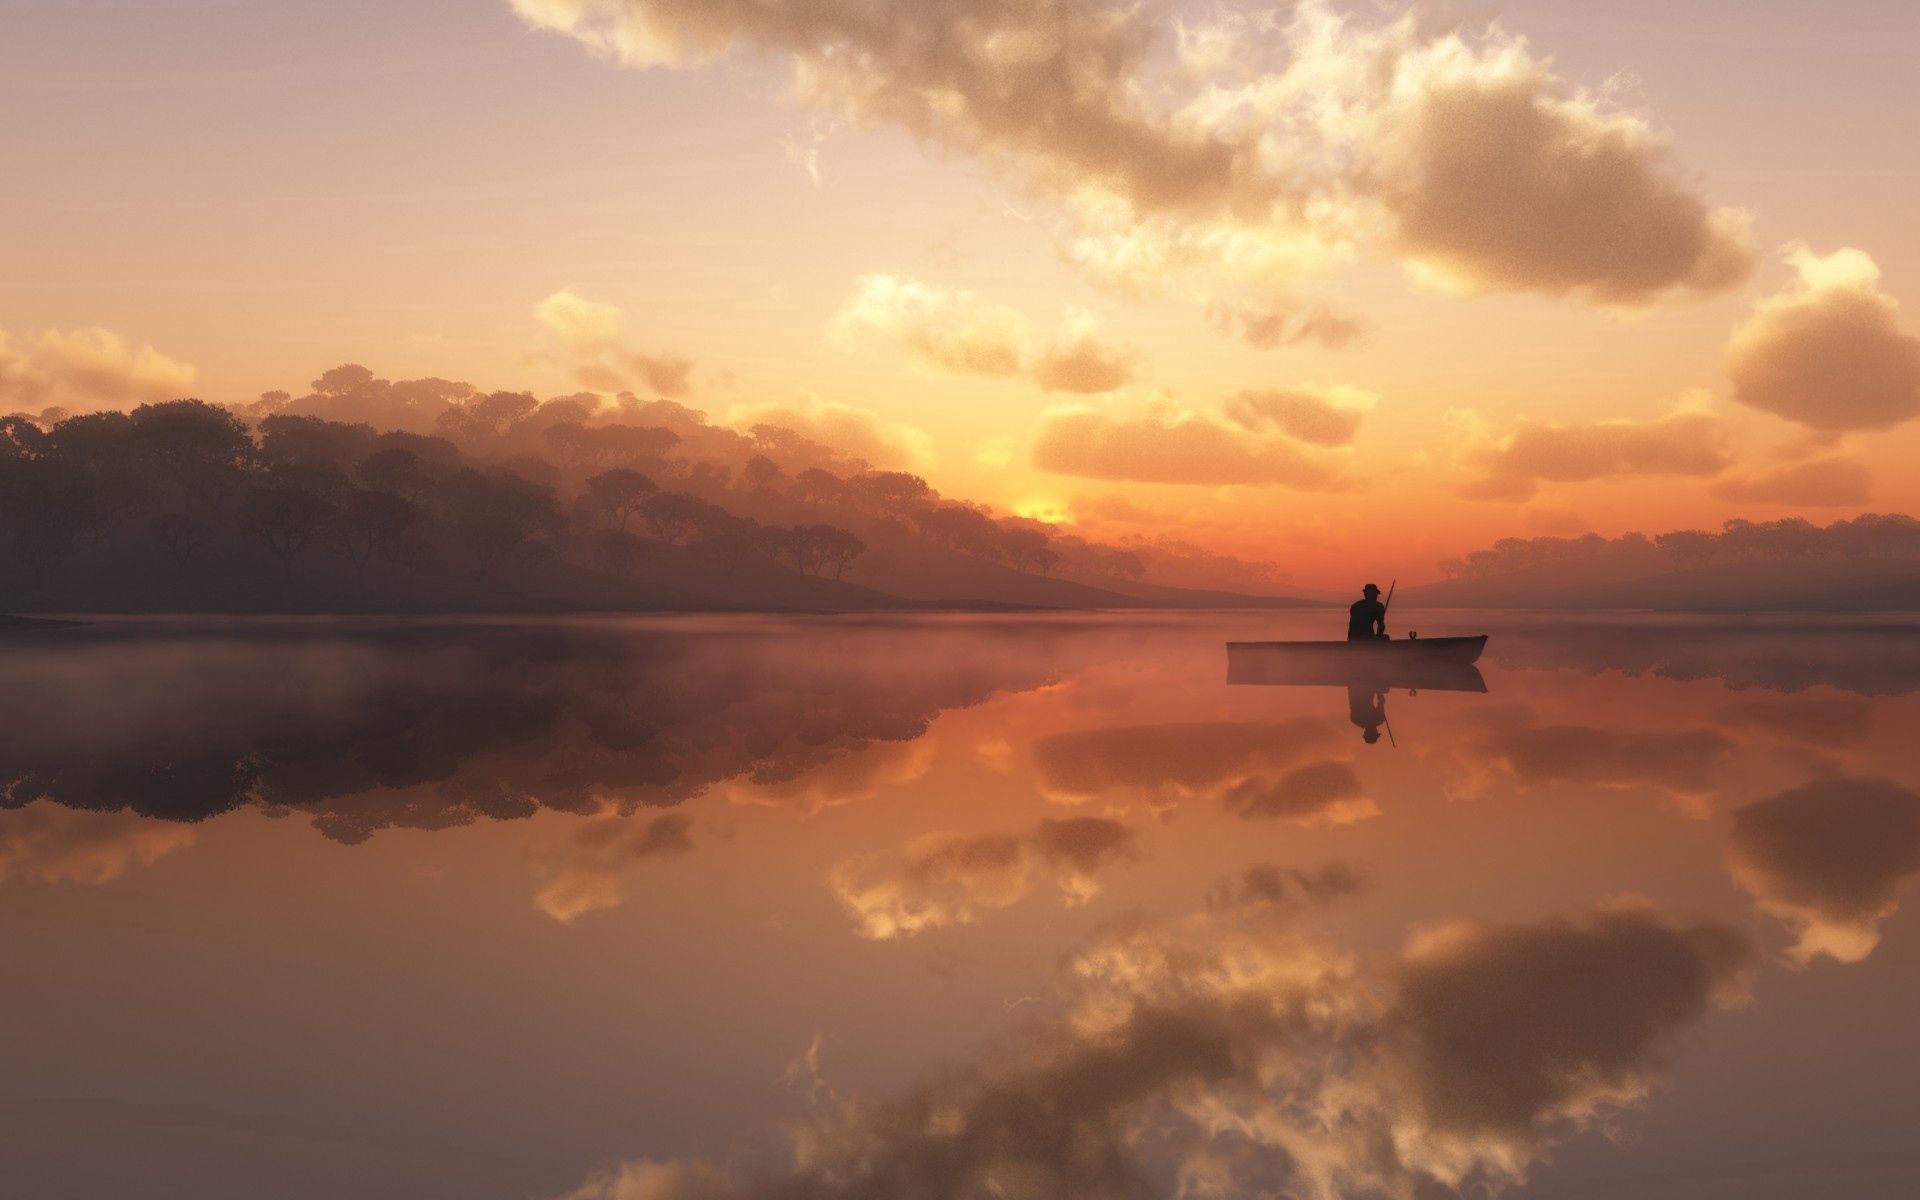 fisherman, nature, silhouette, fog, morning, boat